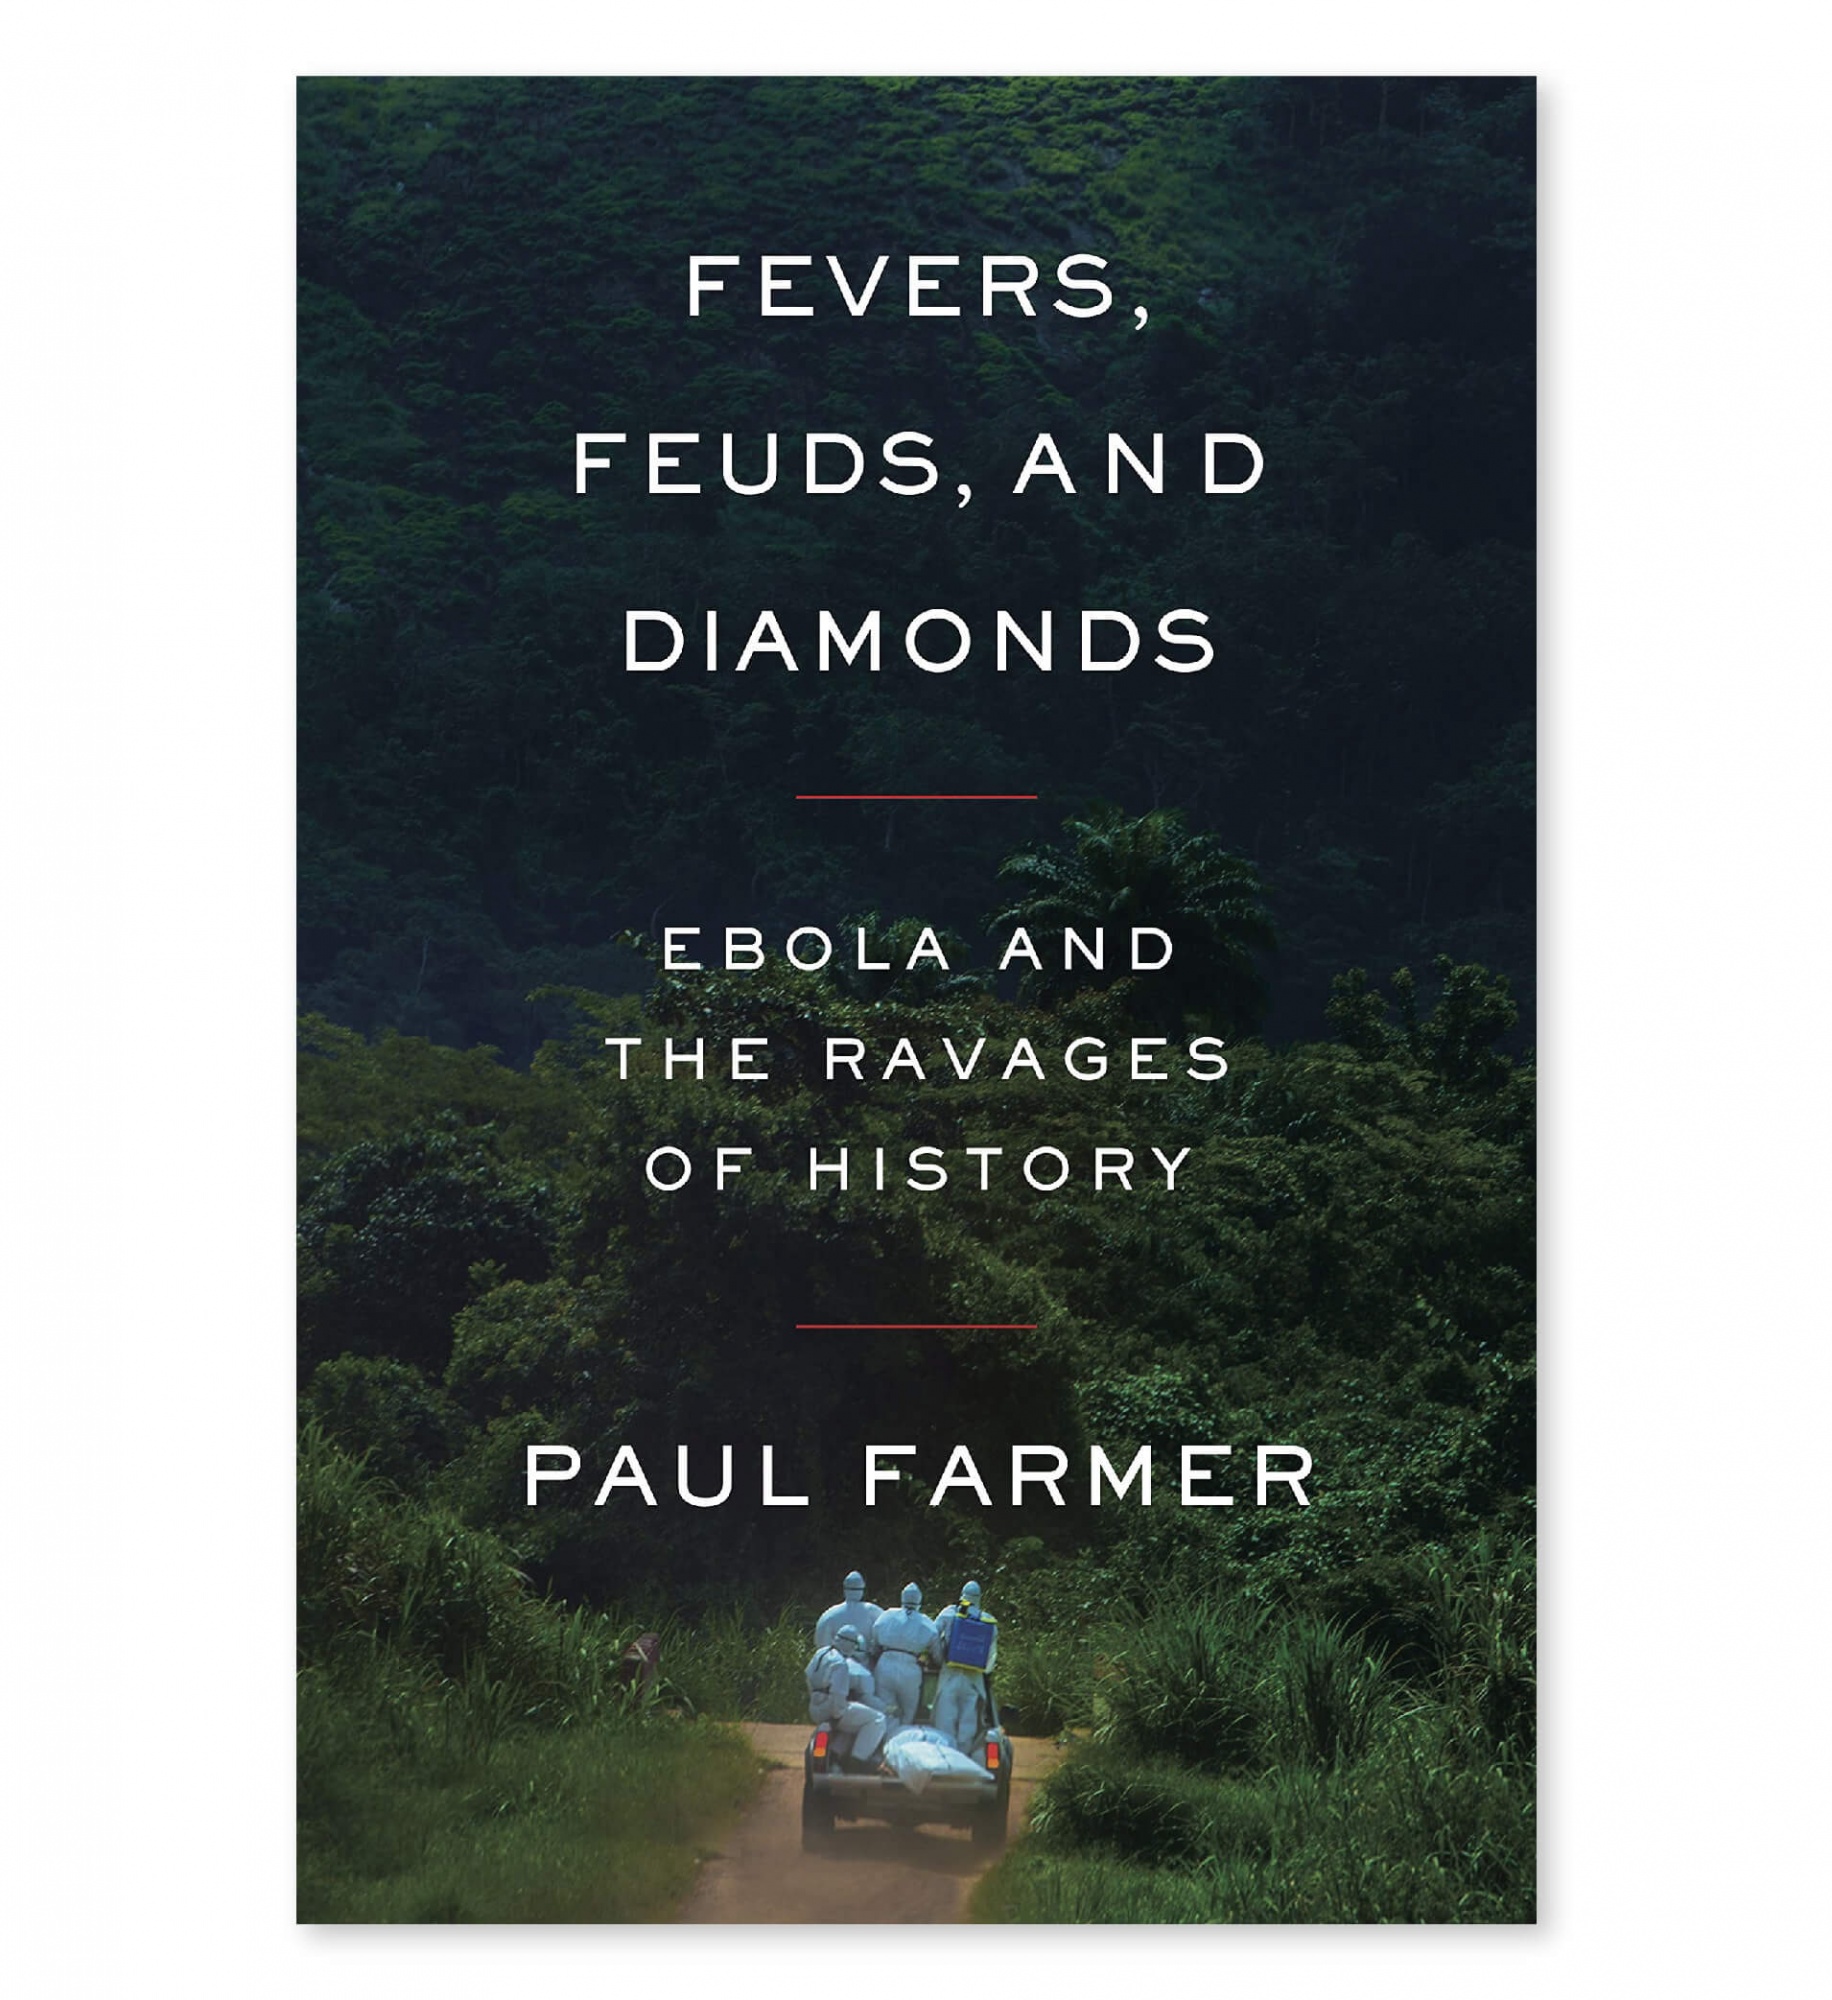 Fevers, Feuds, and Diamonds by Paul Farmer